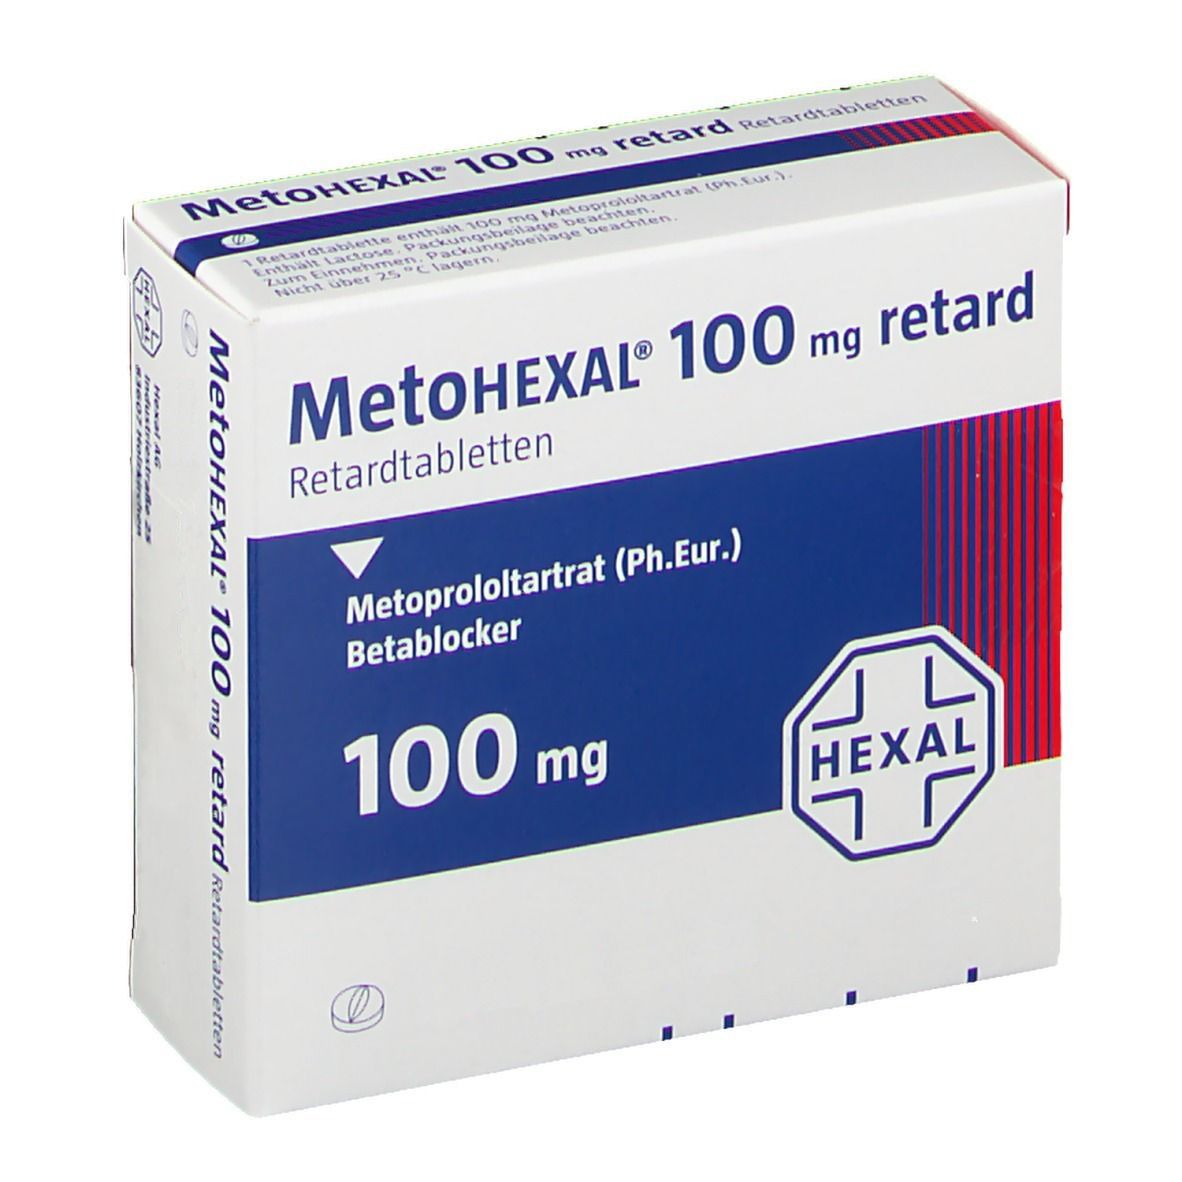 MetoHEXAL® 100 mg